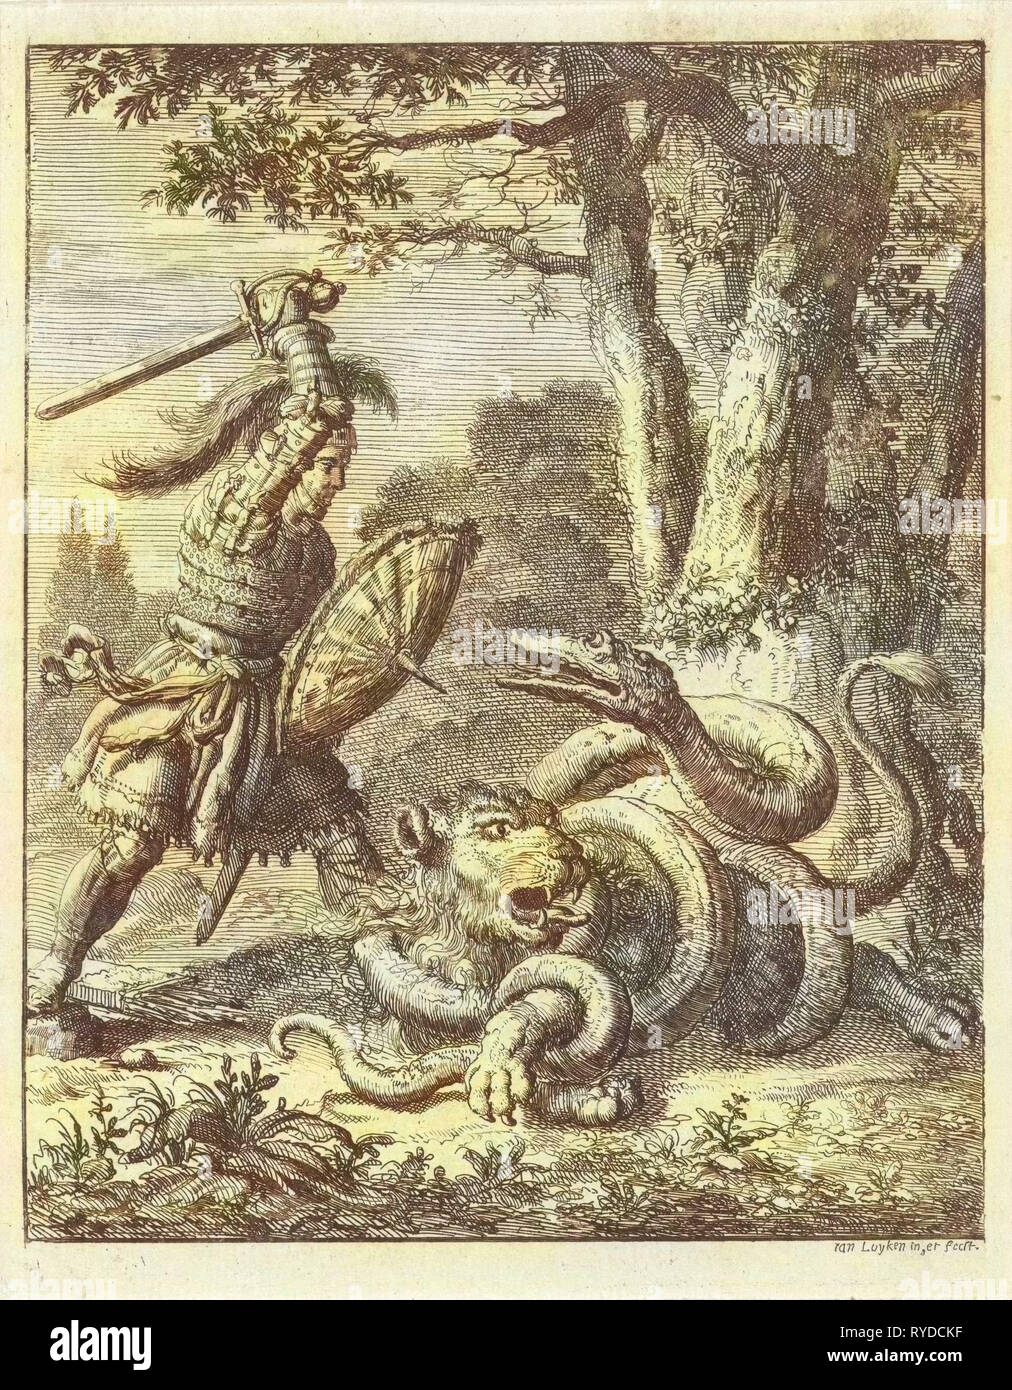 Godfrey of Bouillon free a lion from the stranglehold of a snake, Jan Luyken, 1683 Stock Photo